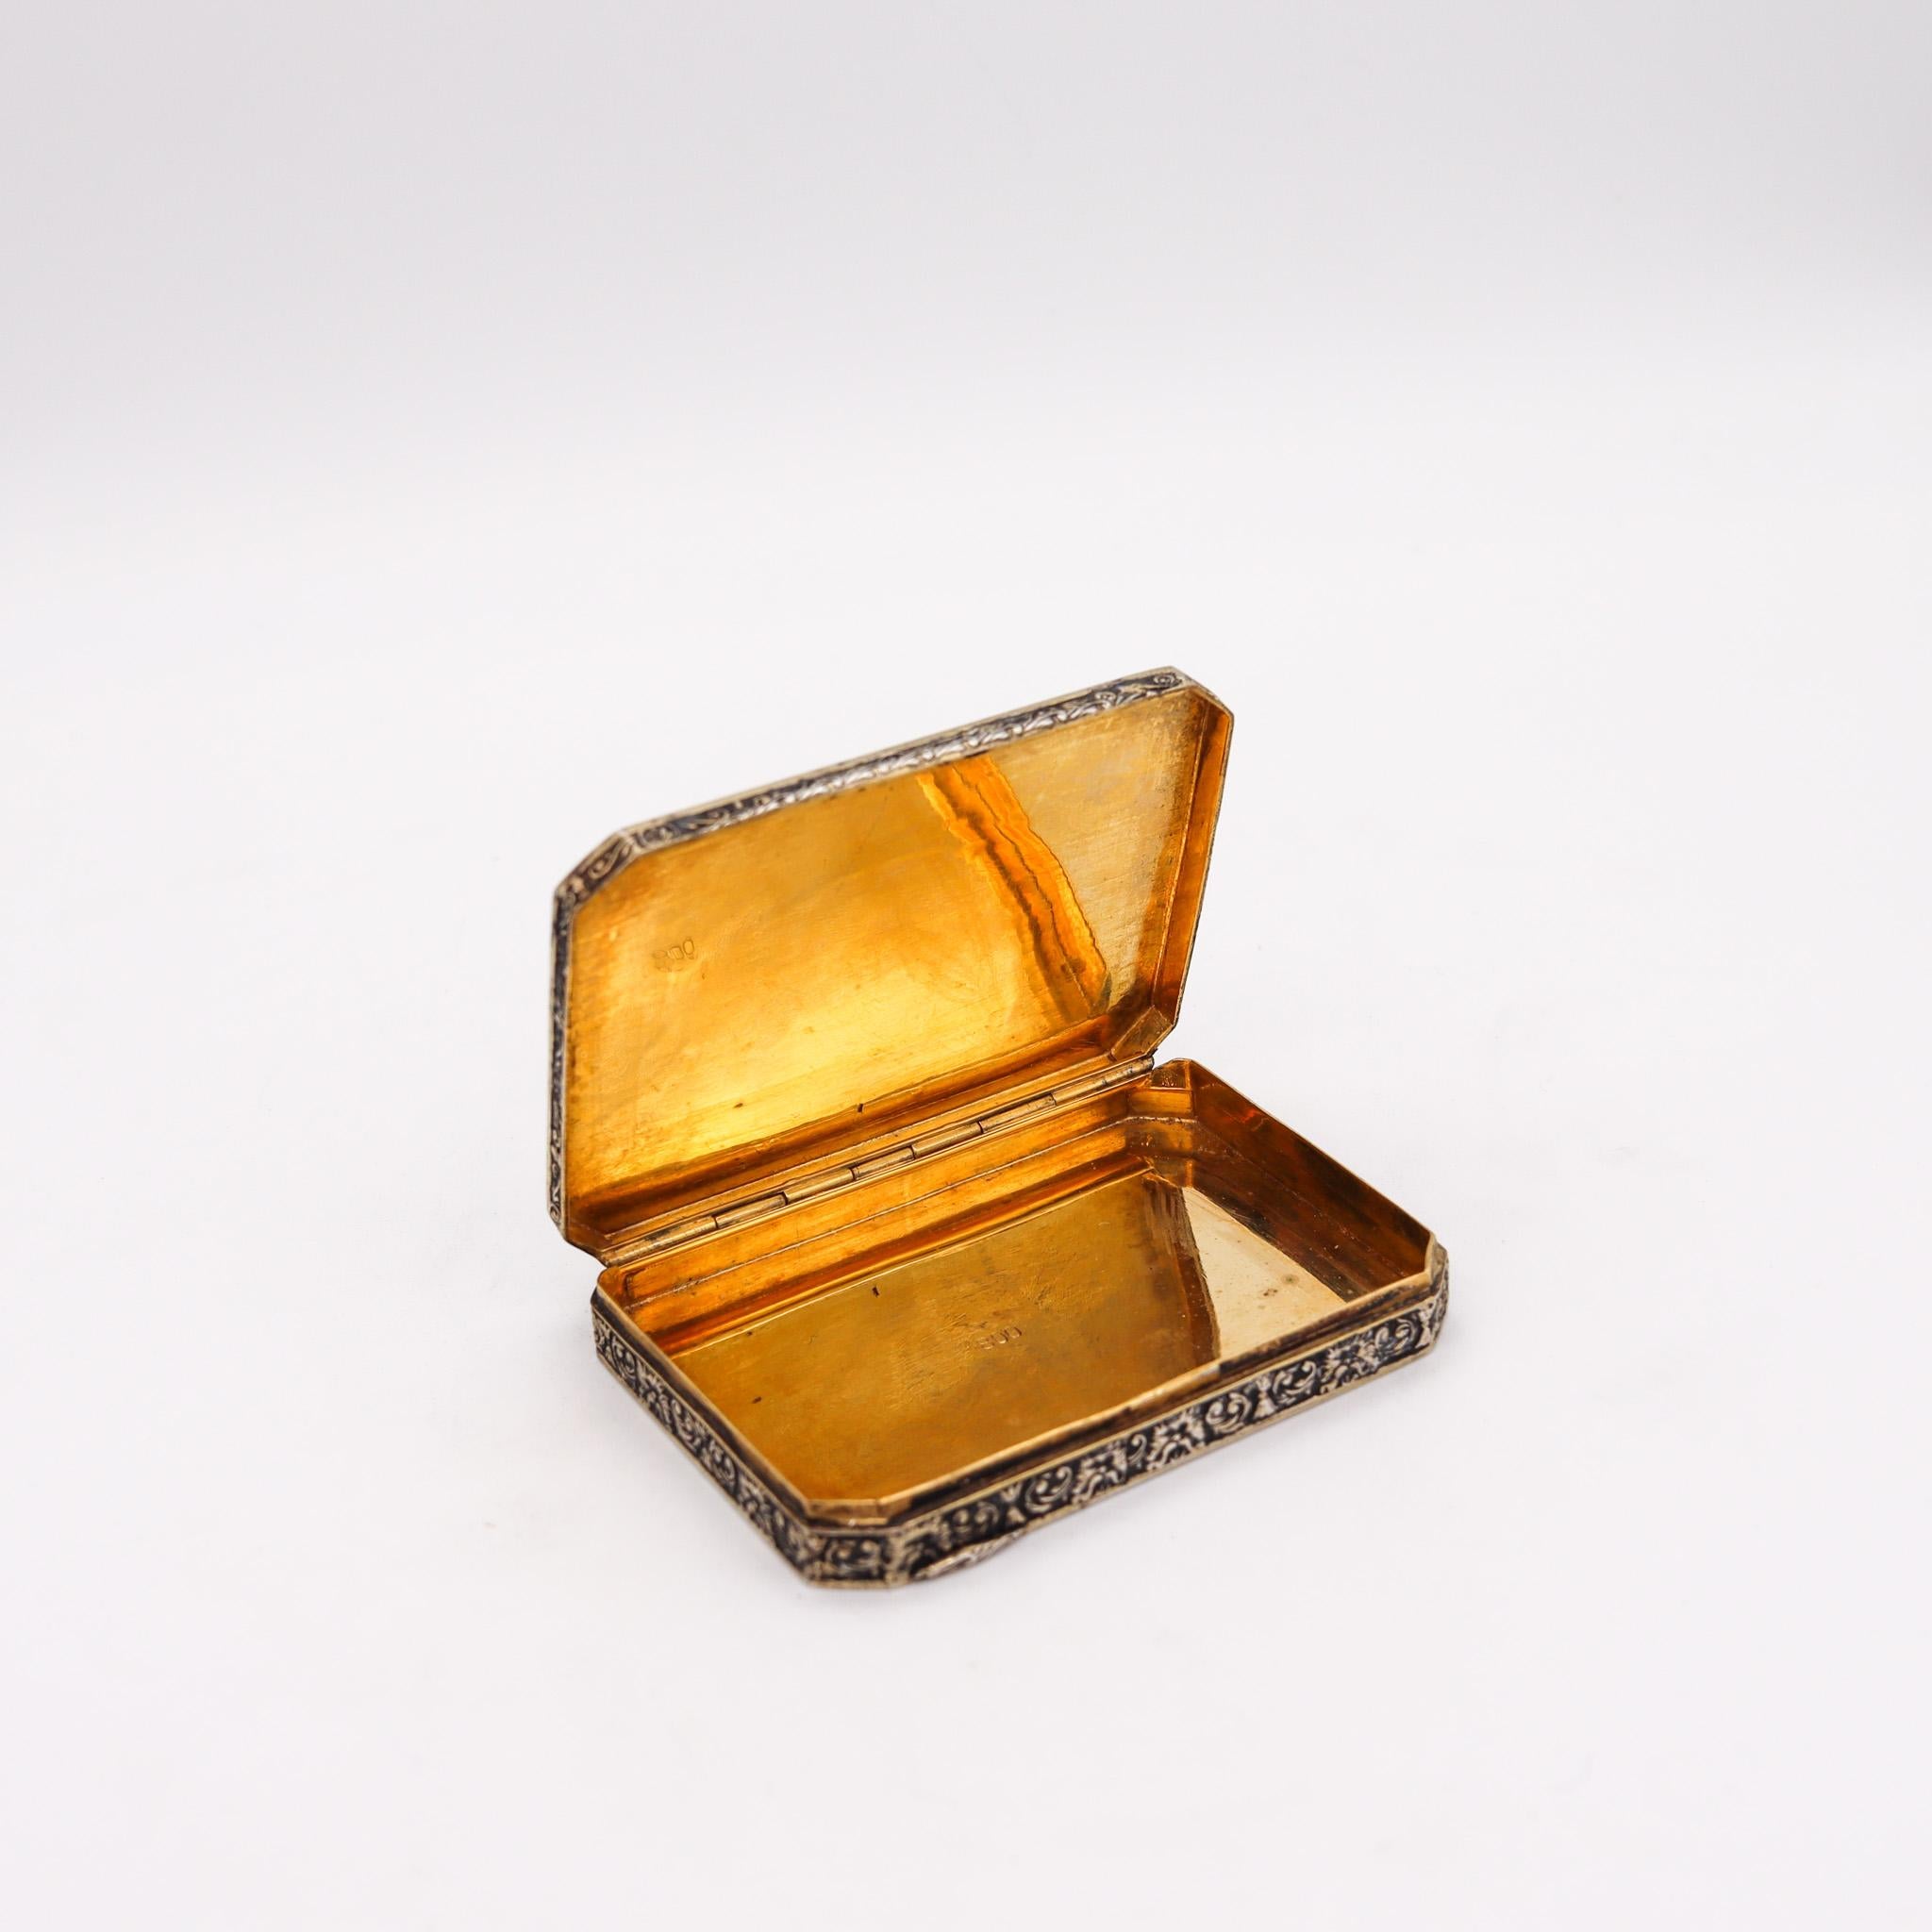 Italian 1920 Renaissance Revival Enameled Octagonal Box in .800 Silver For Sale 2